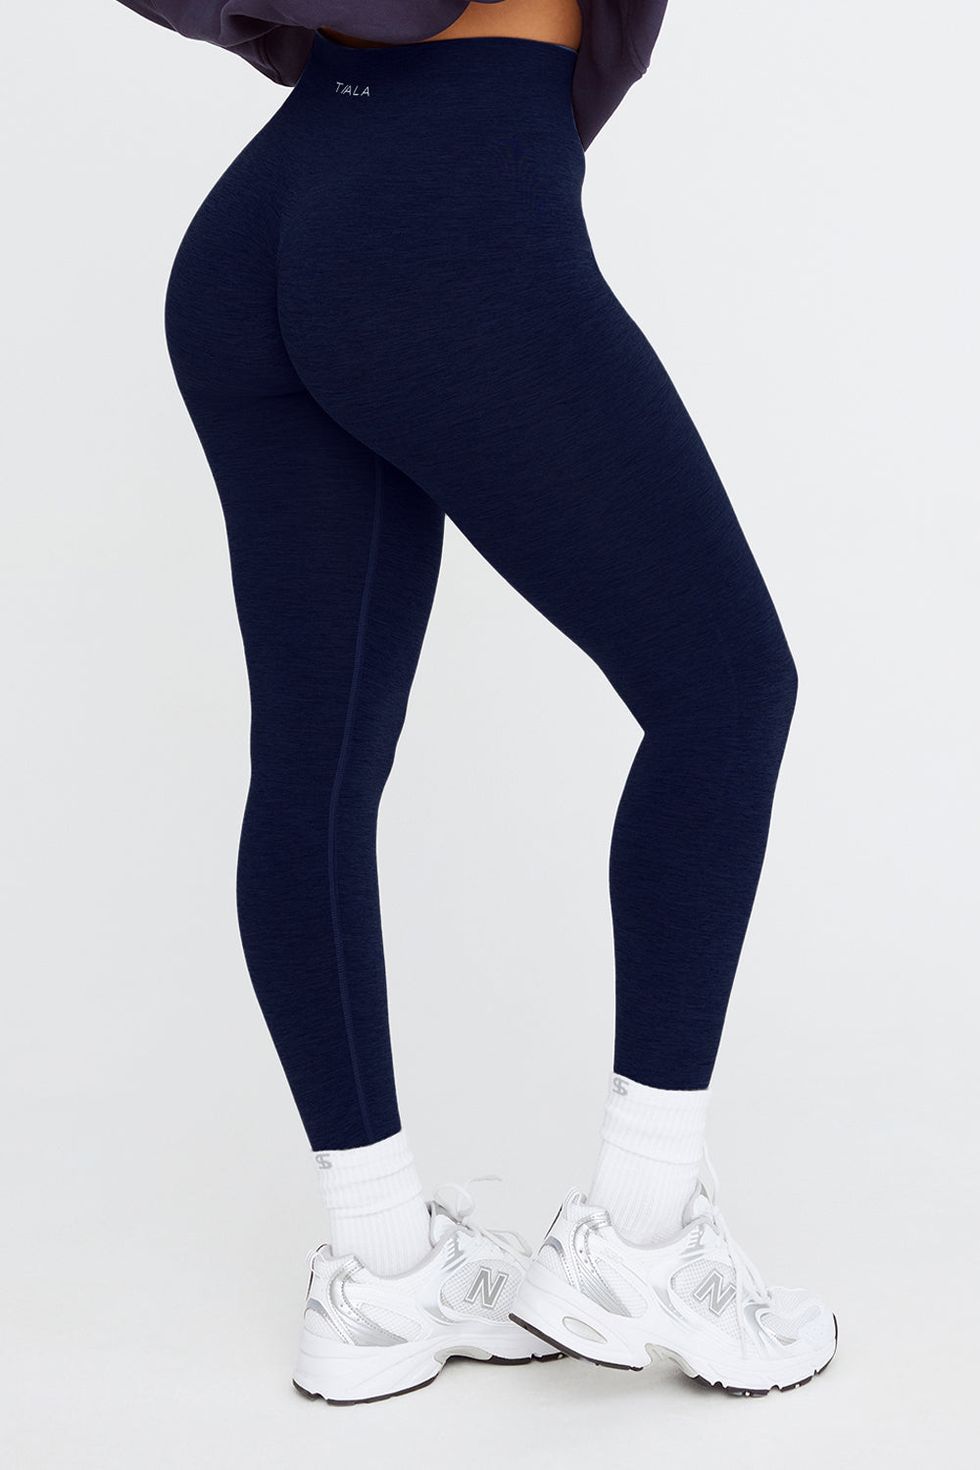 High Waisted Yoga Pants Women Capri Leggings Workout Leggings Seamless Navy  Blue 